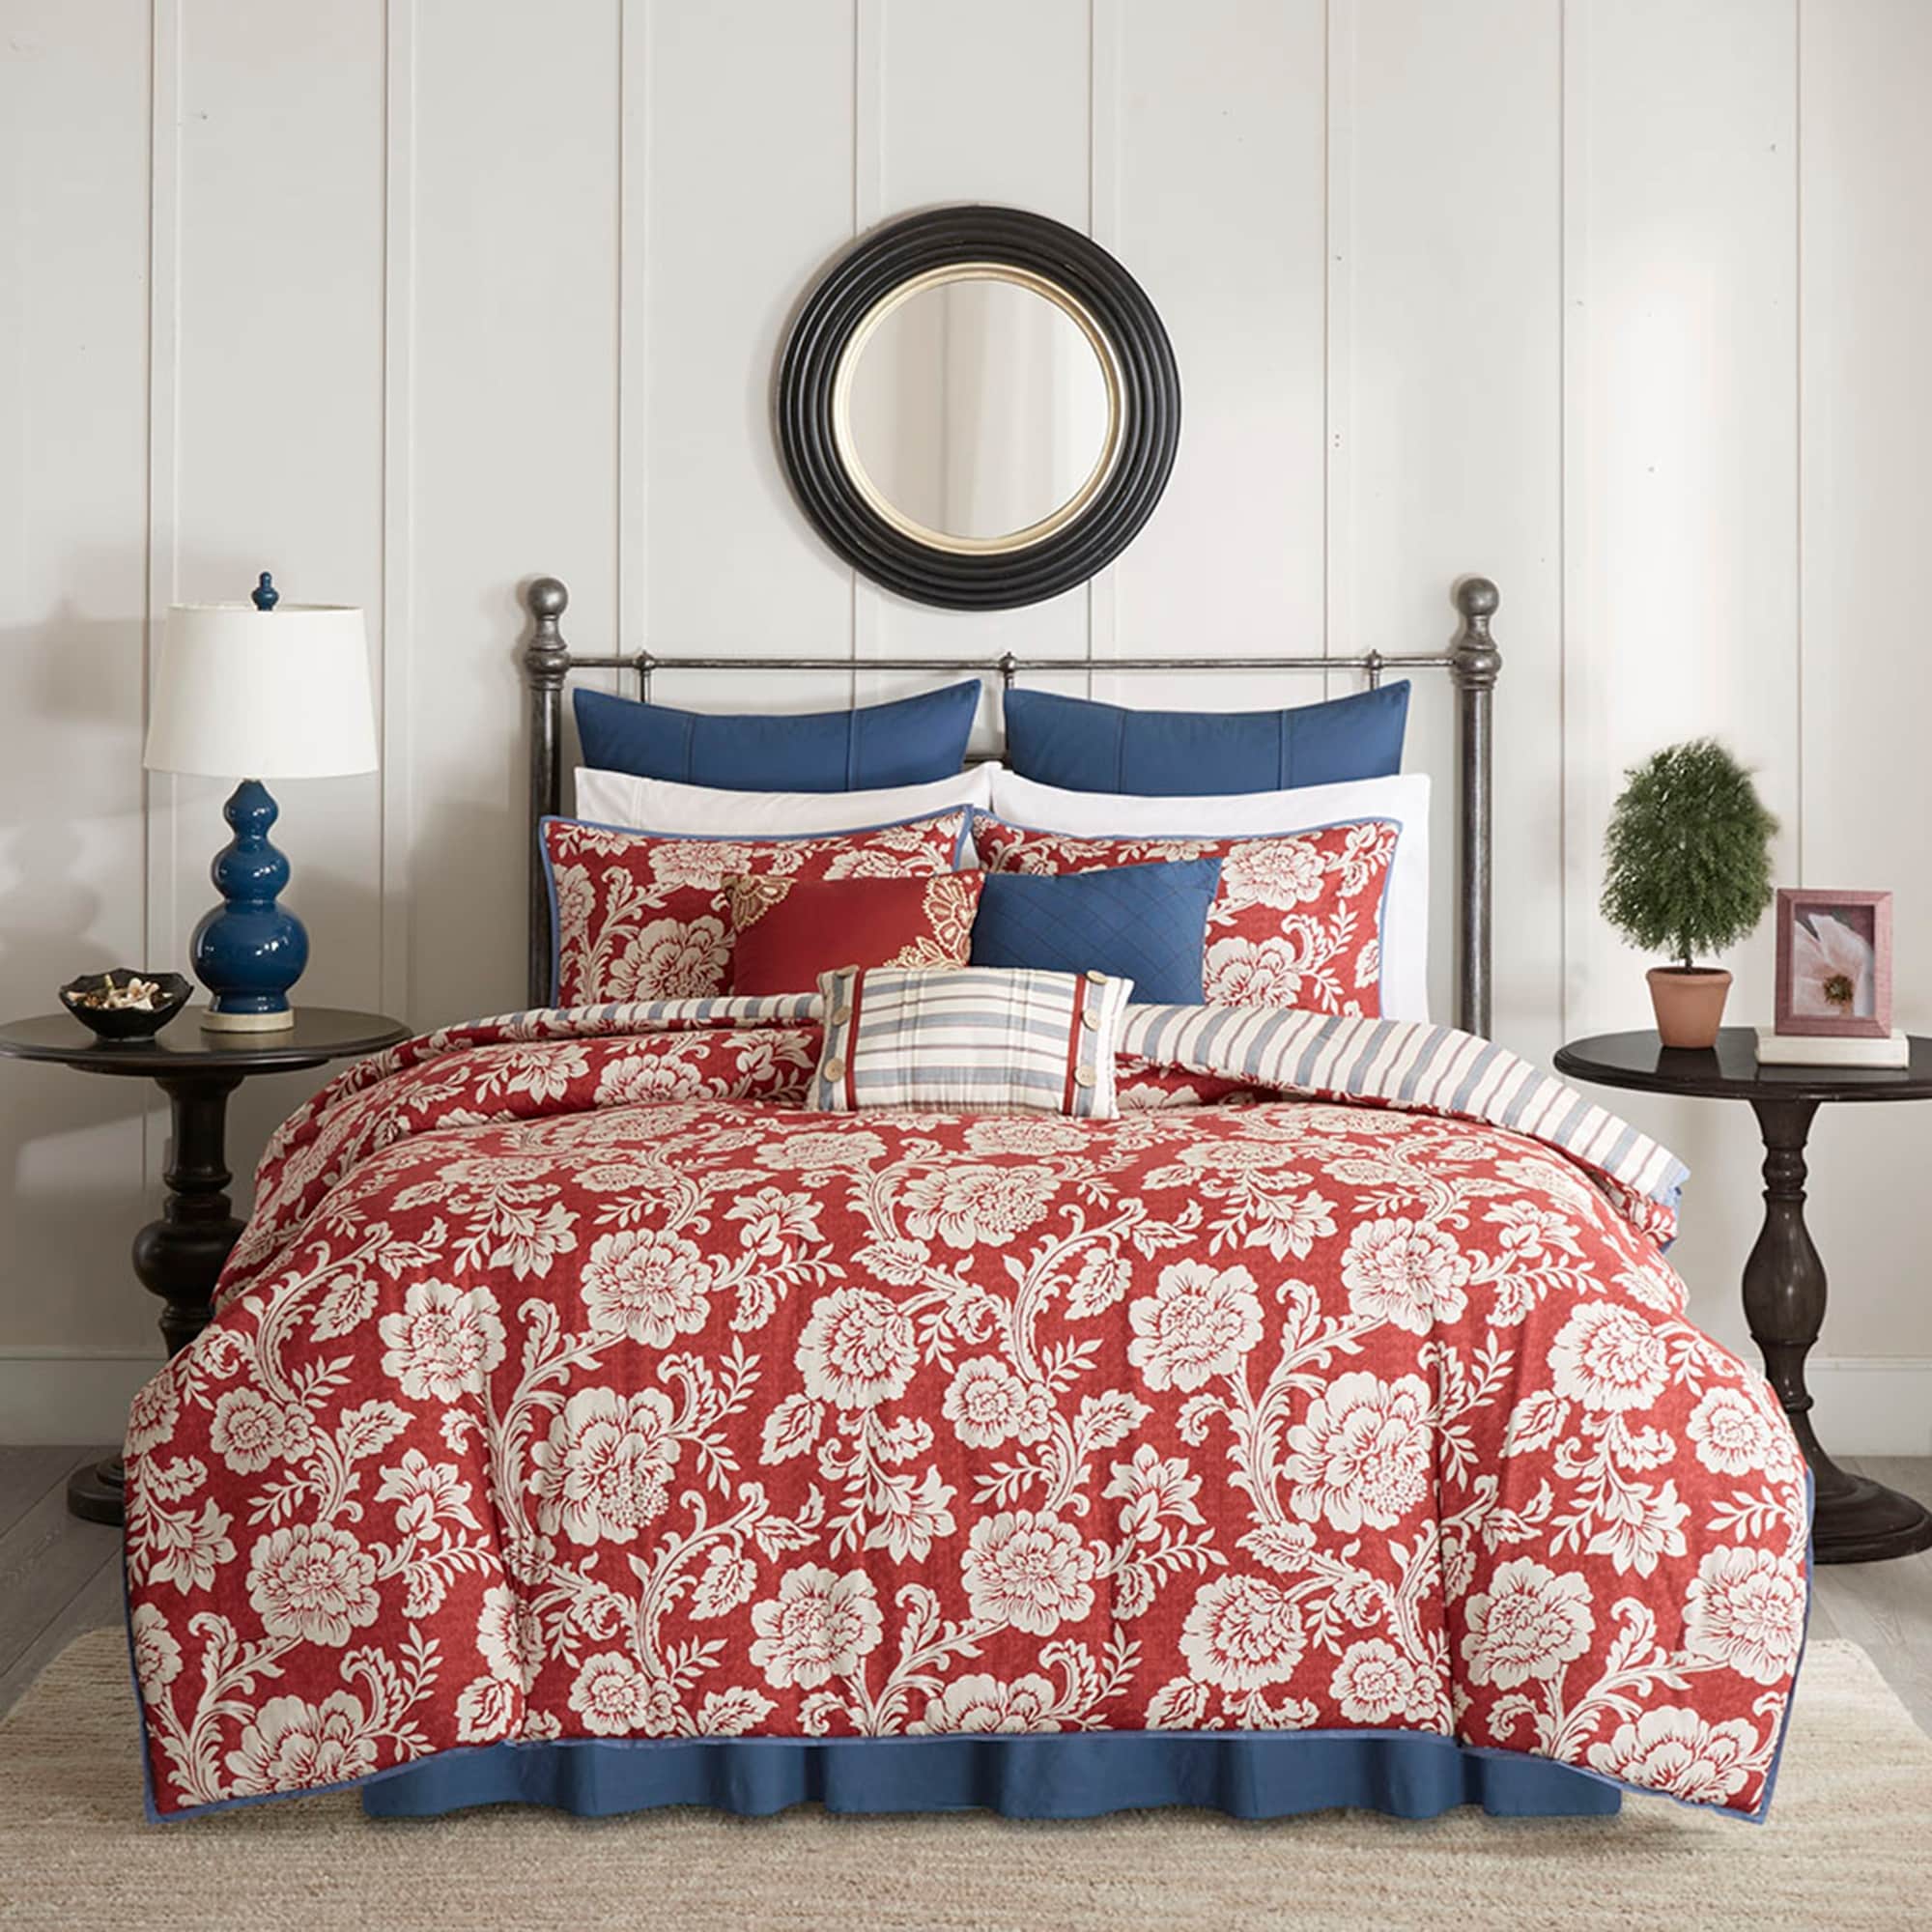 Madison Park Maia 8-Piece Navy Floral Cotton Queen Comforter Set